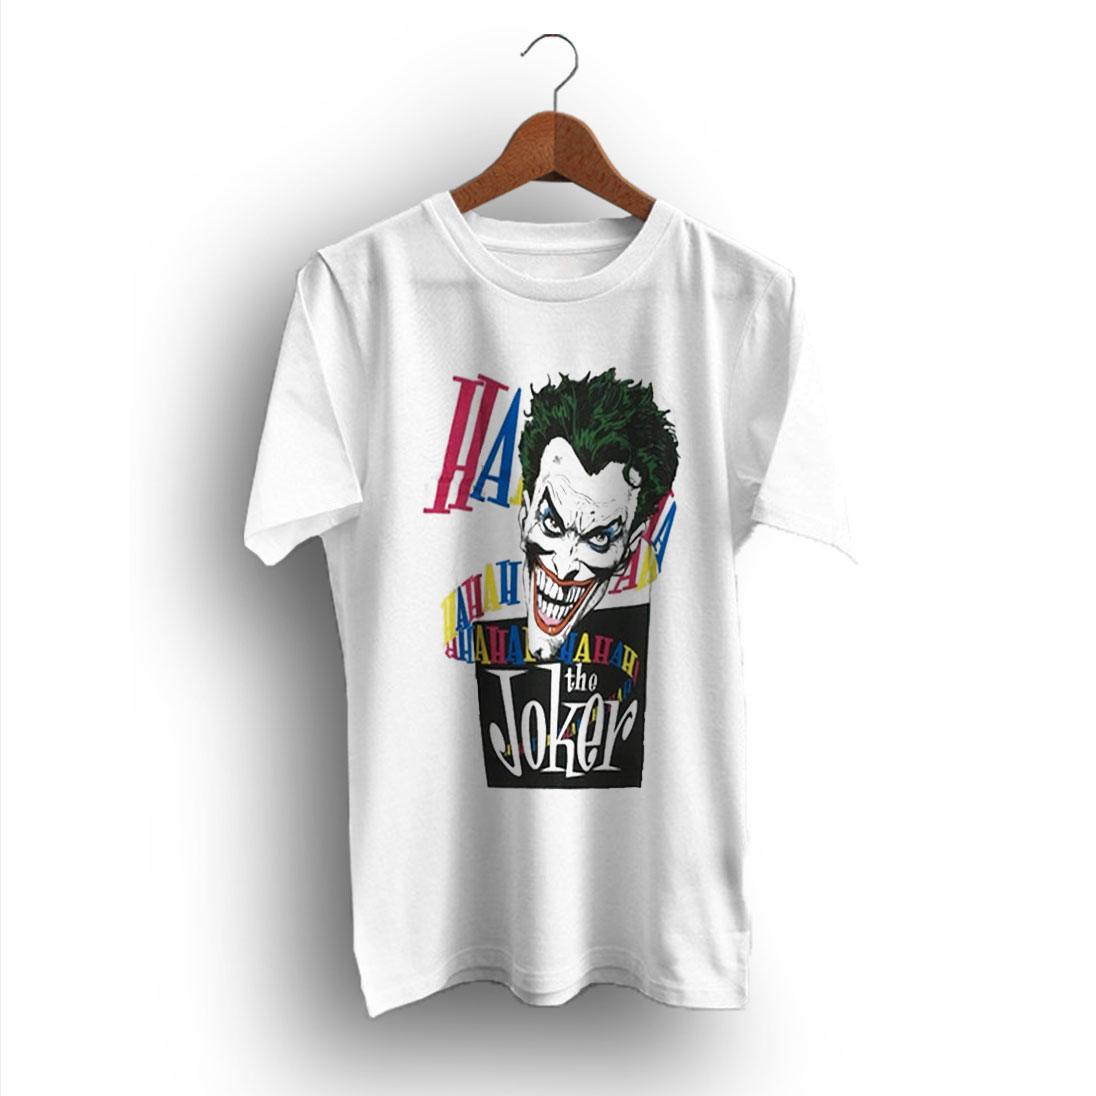 joker hahaha t shirt